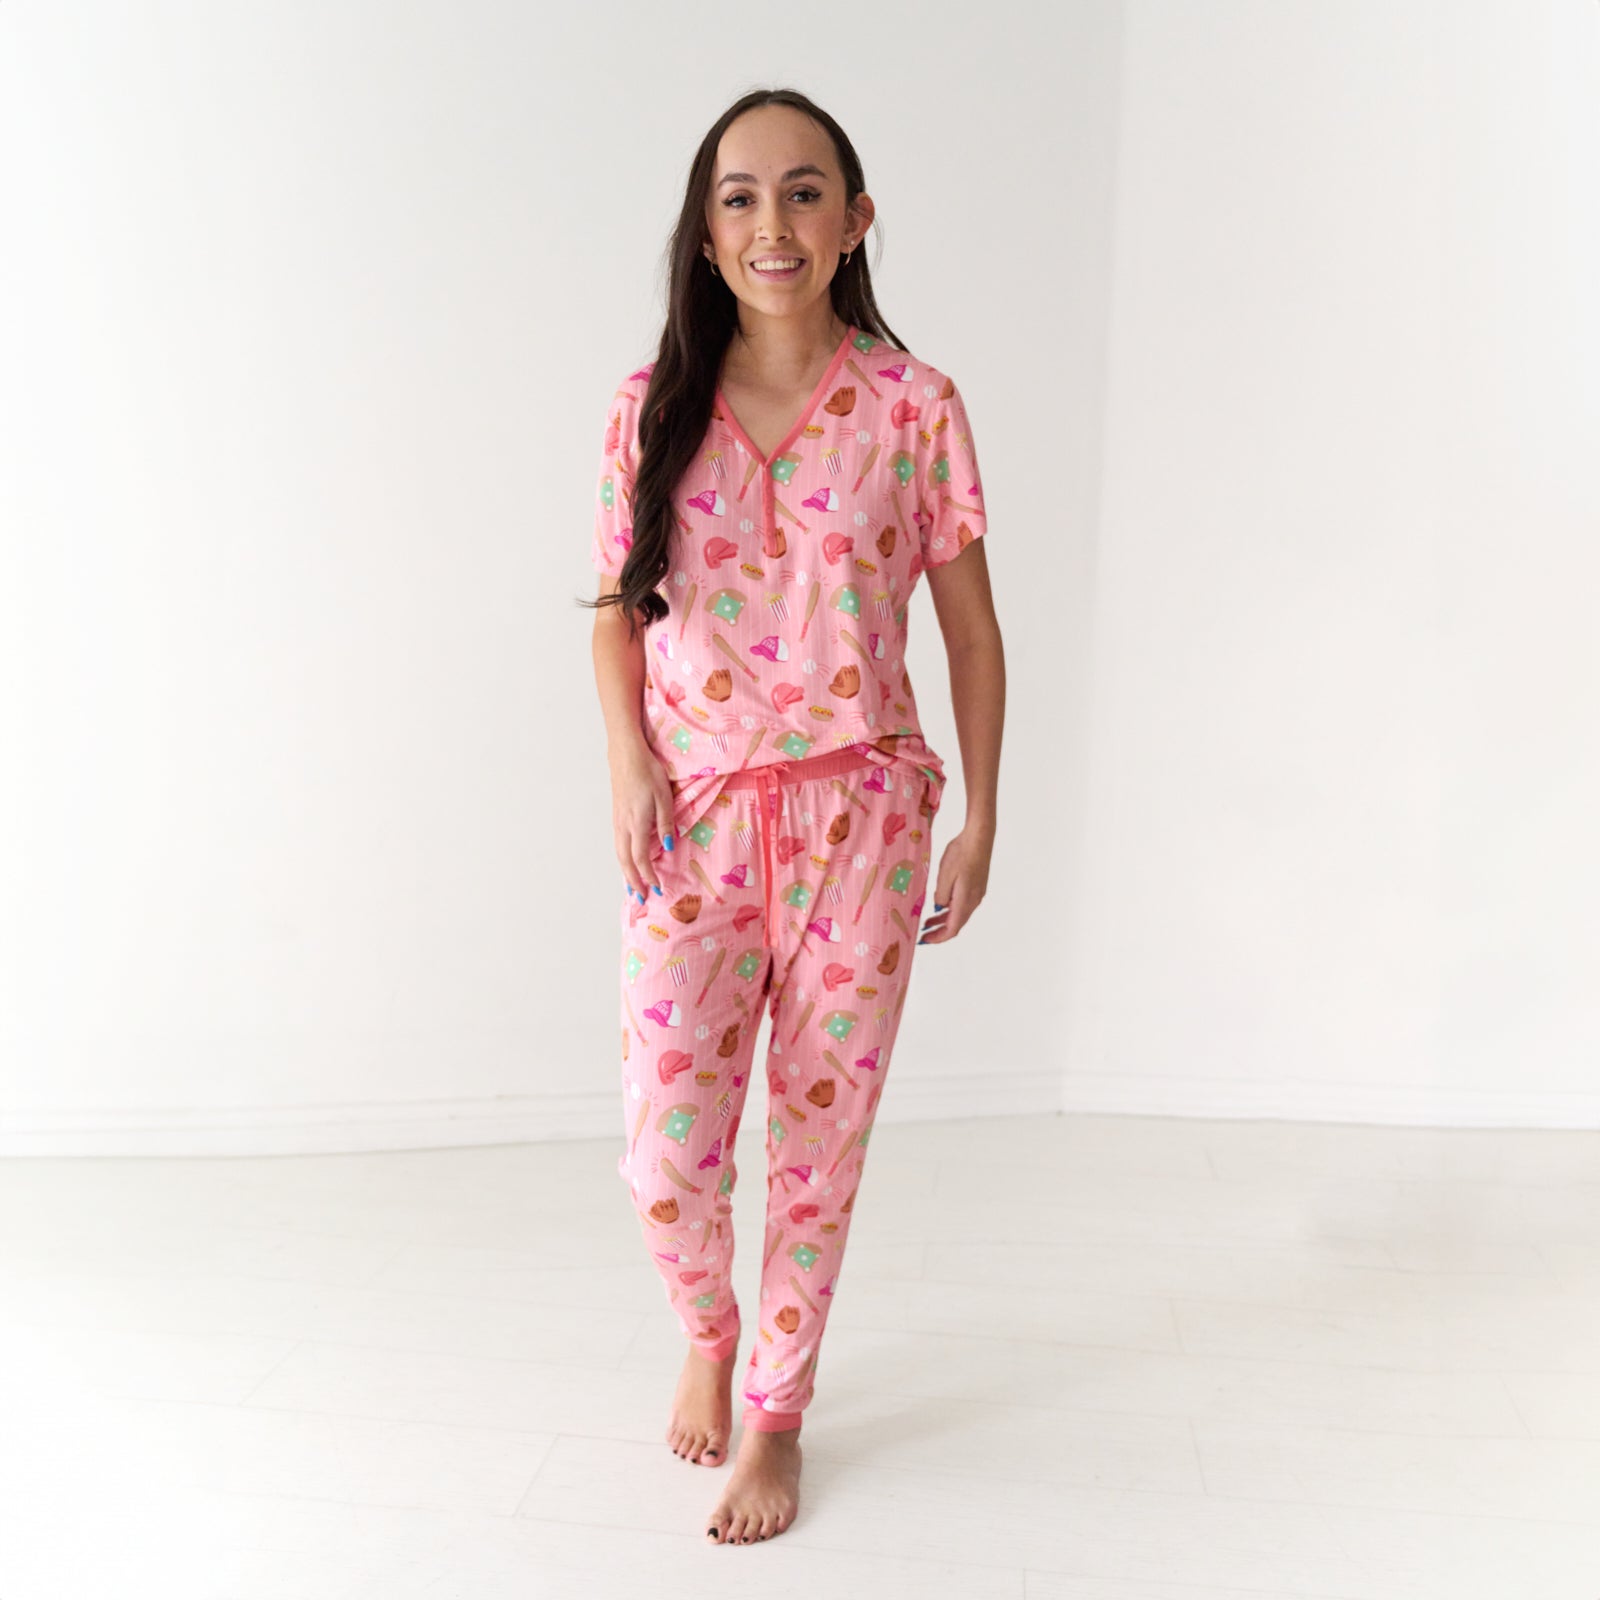 Alternate image of a woman wearing women's Pink All Stars pajama pants and matching women's pajama top